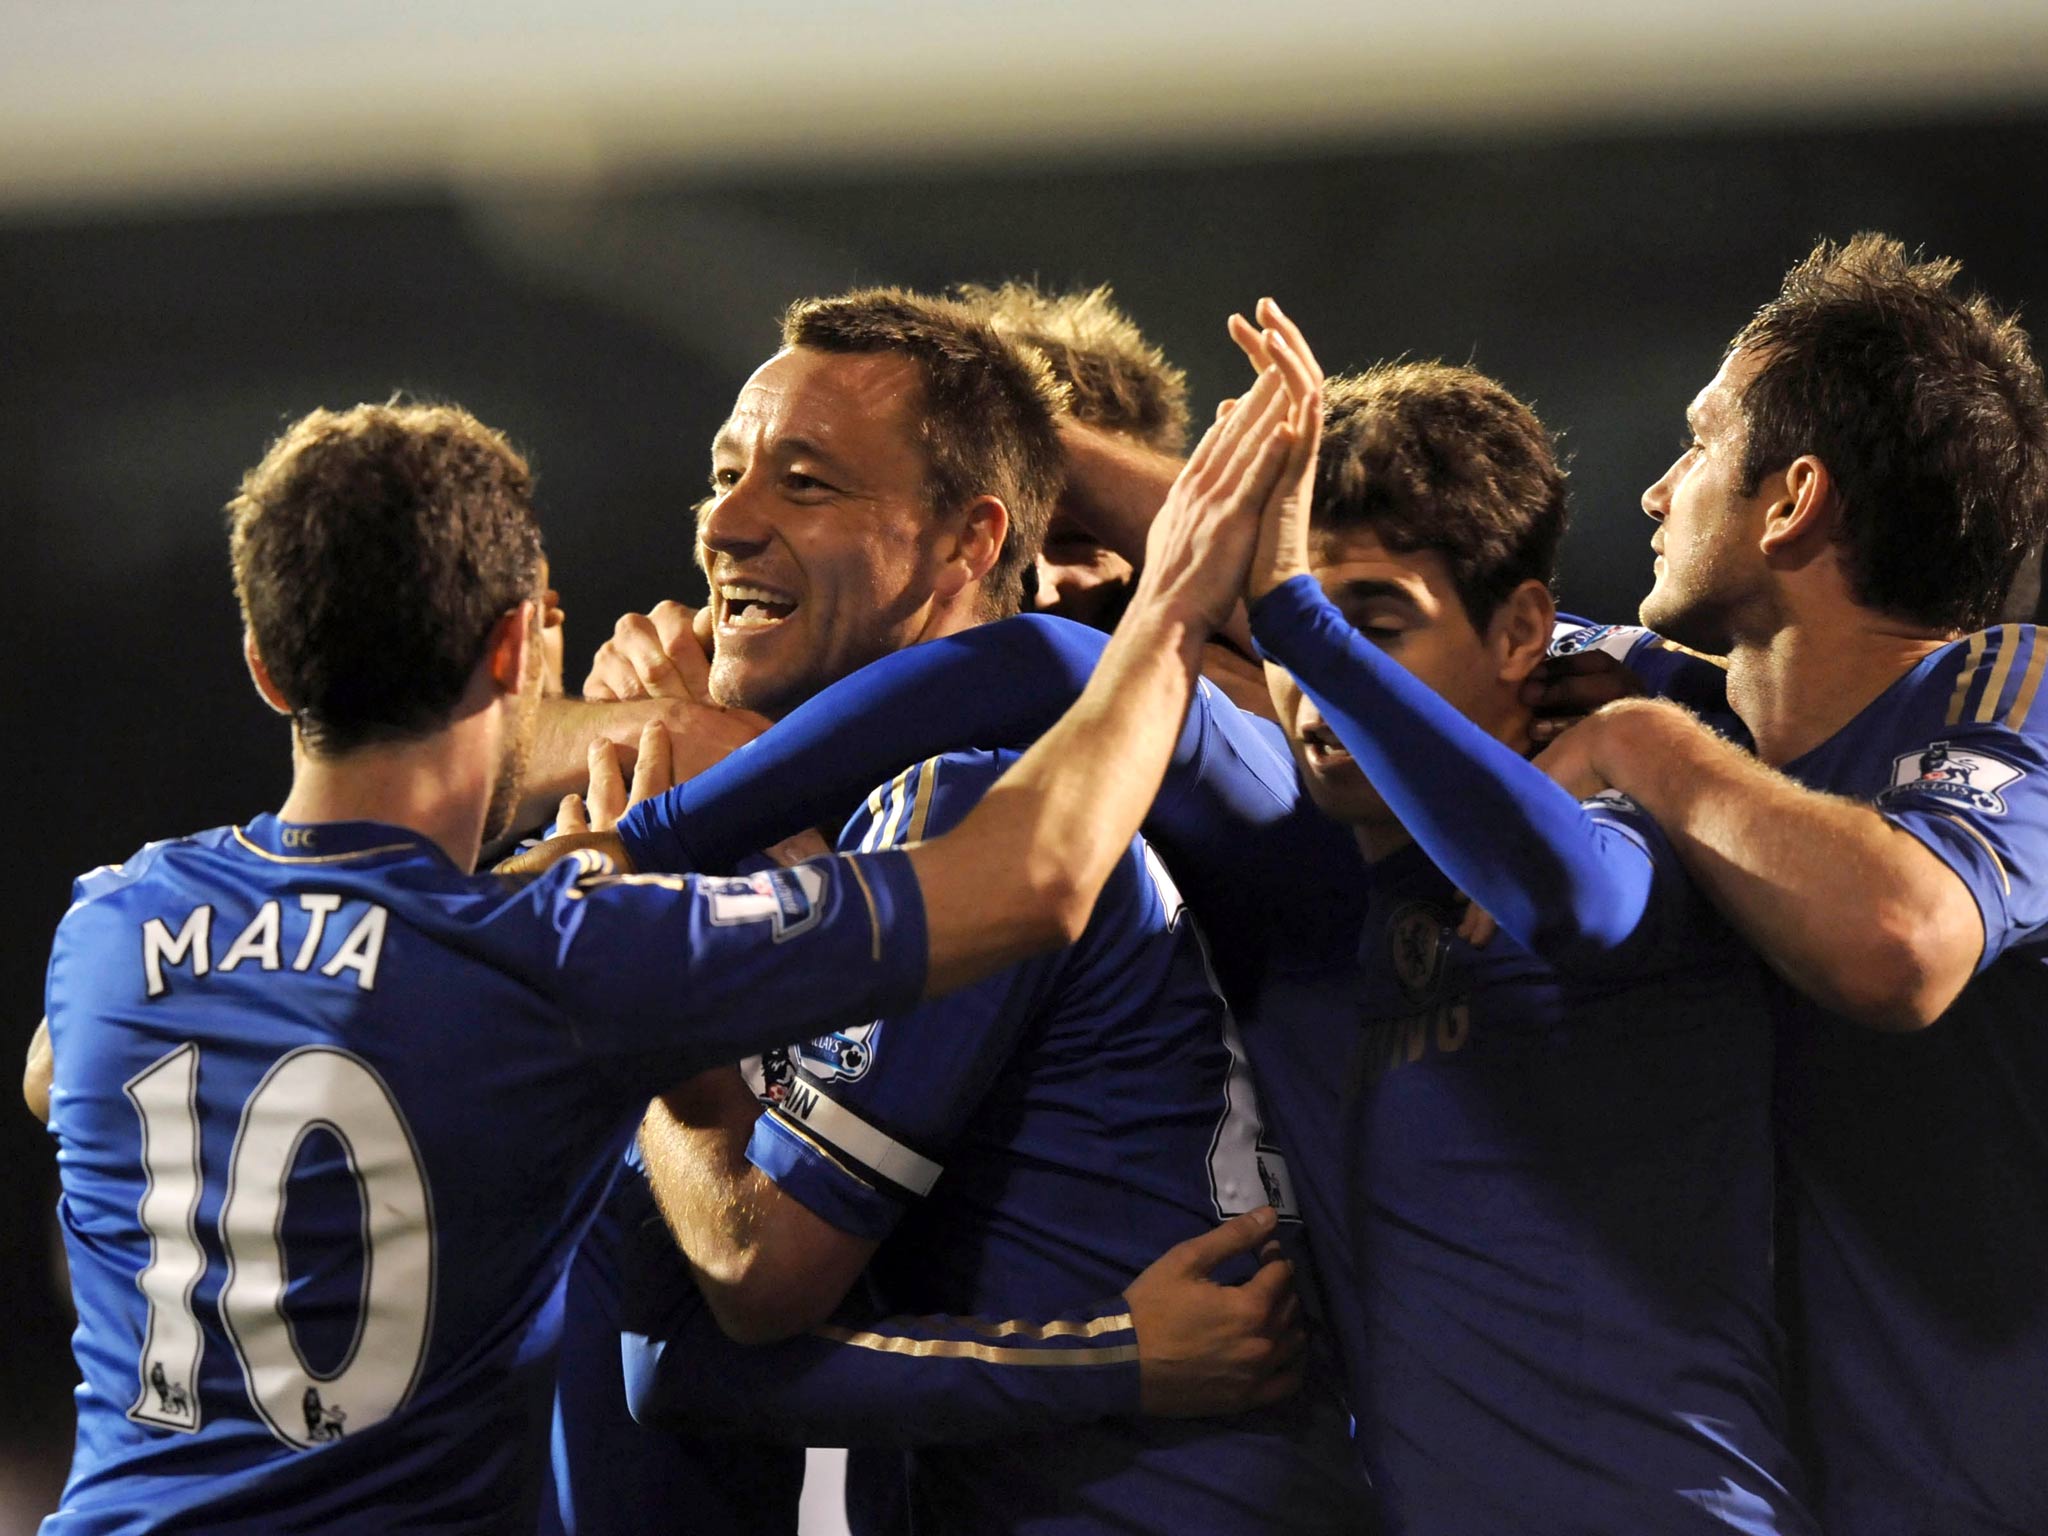 Chelsea captain John Terry celebrates after scoring against Fulham